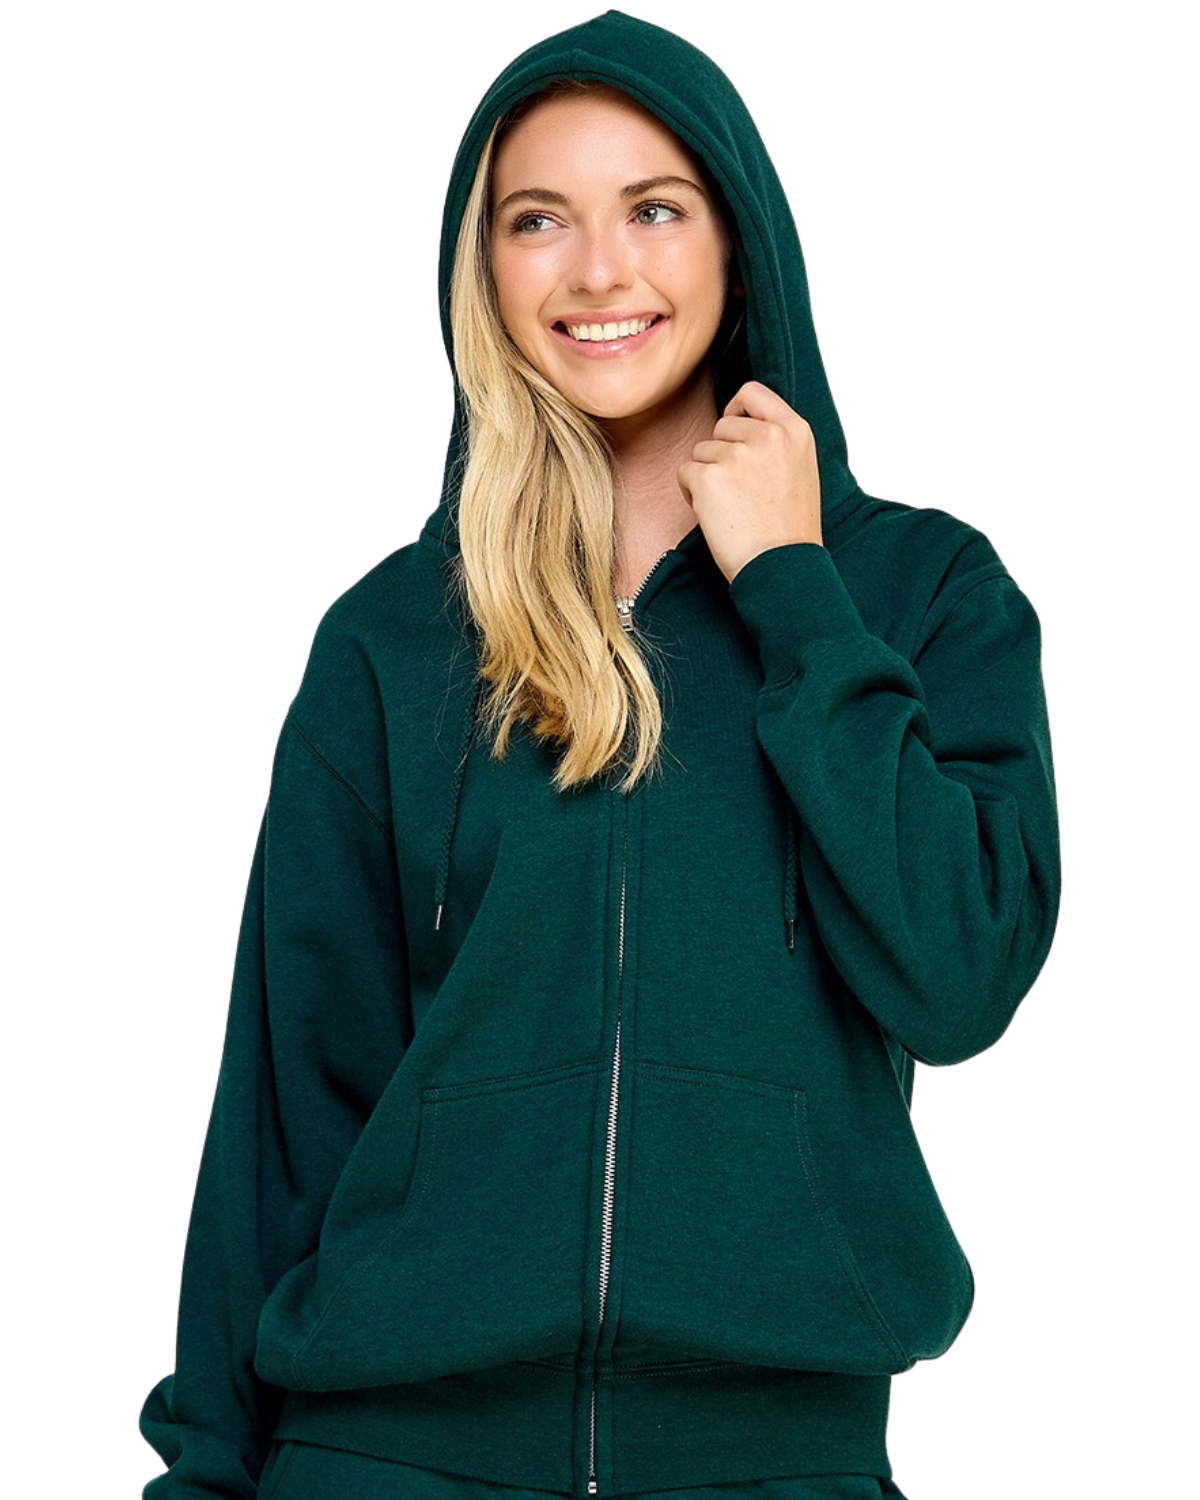 Model on a white backdrop wearing a women's oversized fleece zip up hooded sweater in solid forest green